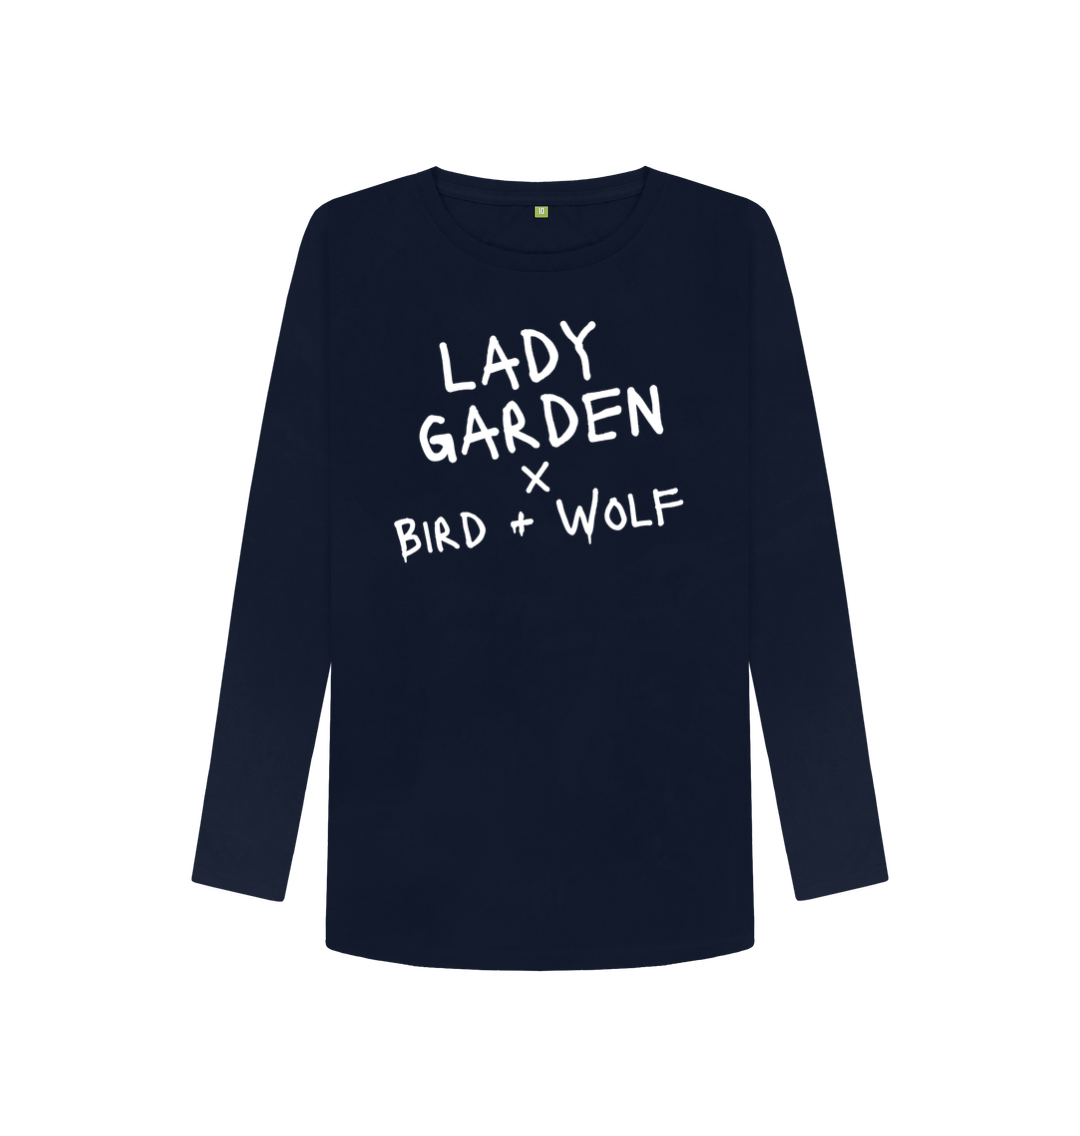 Navy Blue Lady Garden X Bird + Wolf Long Sleeve Tee